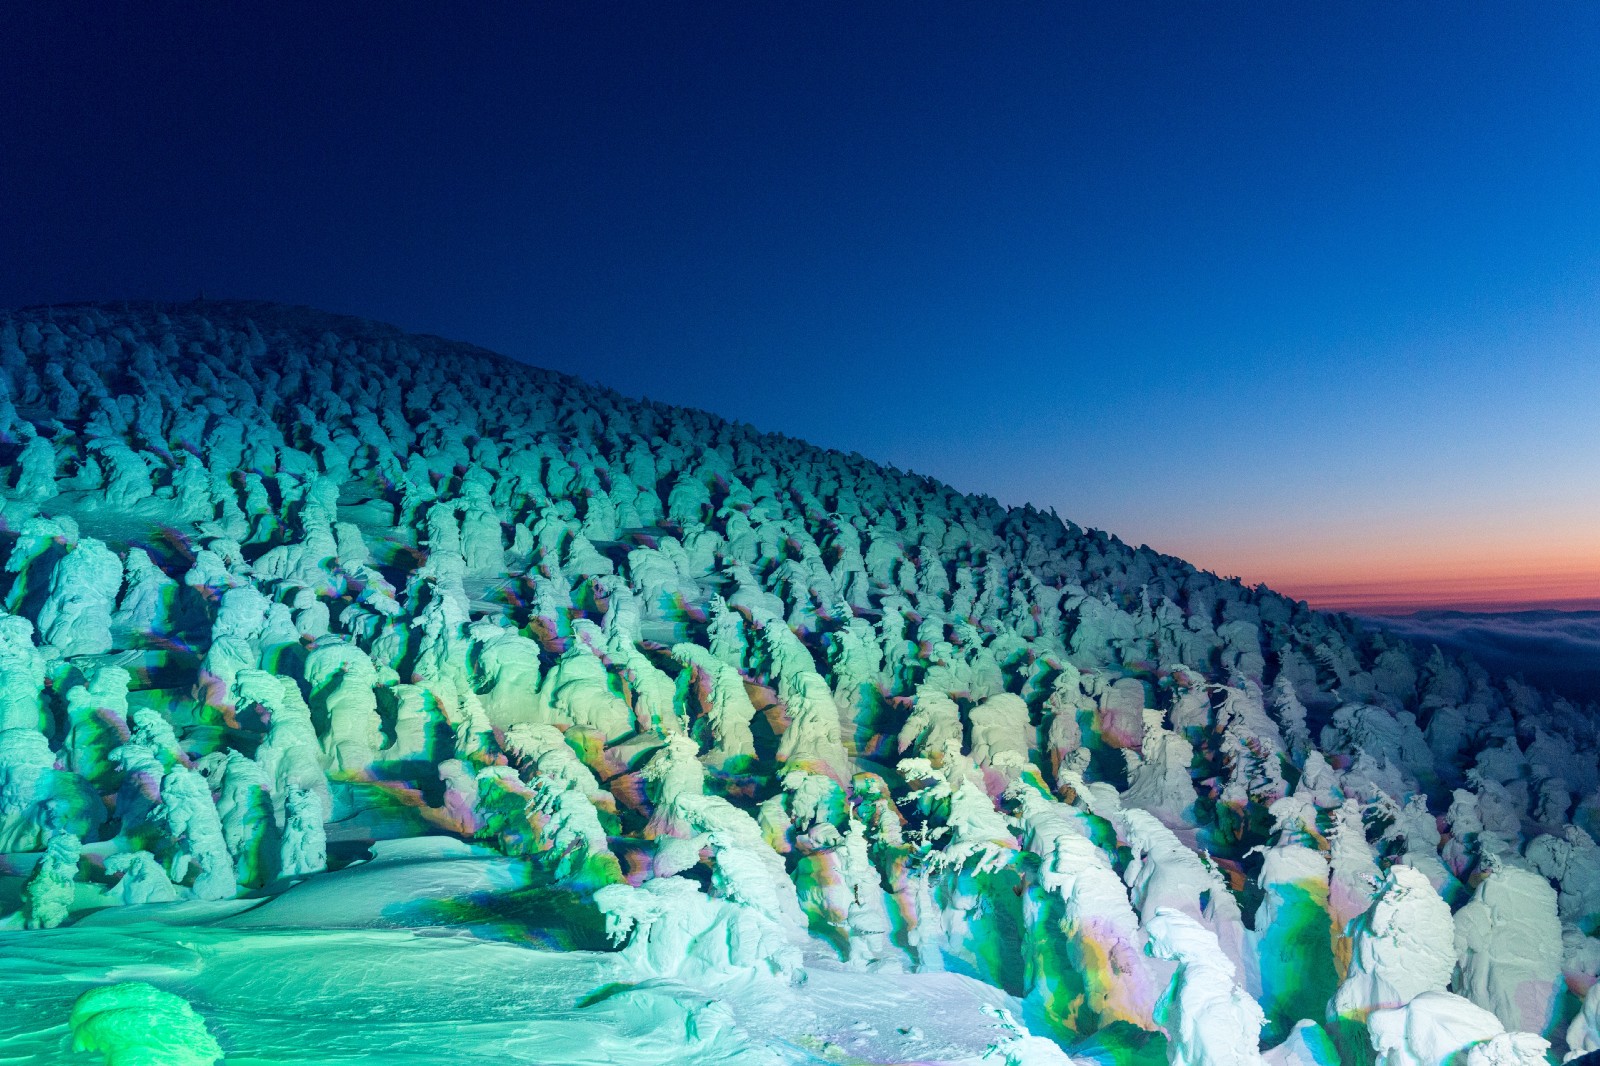 Illuminated snow monsters in Zao